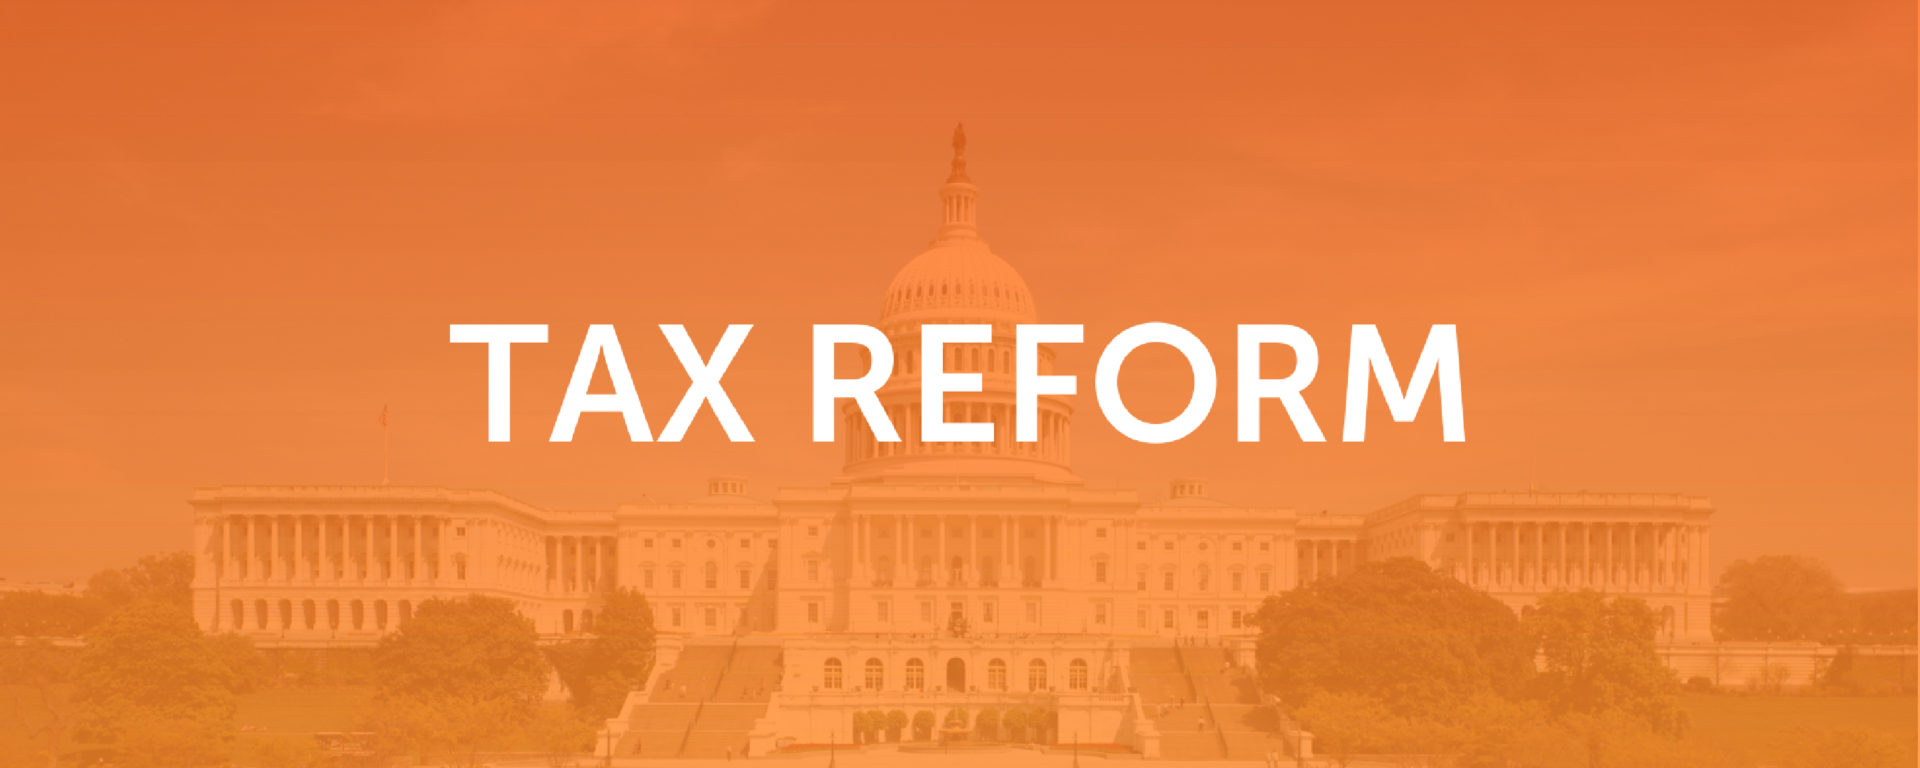 Tax Reform Image